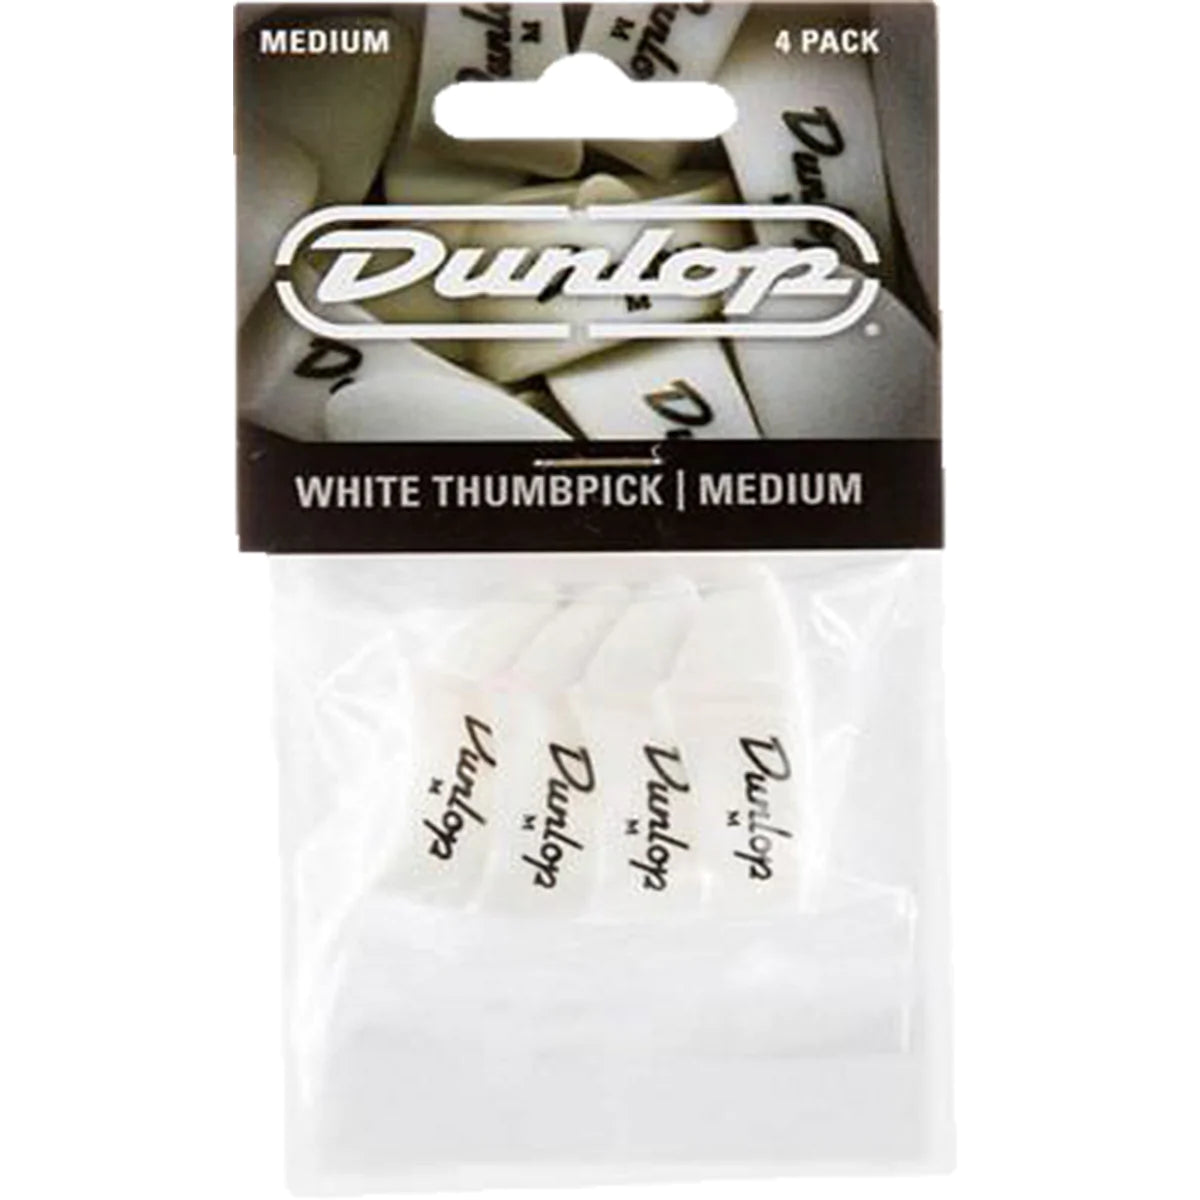 Dunlop Thumb Picks | 4-Pack | Medium White